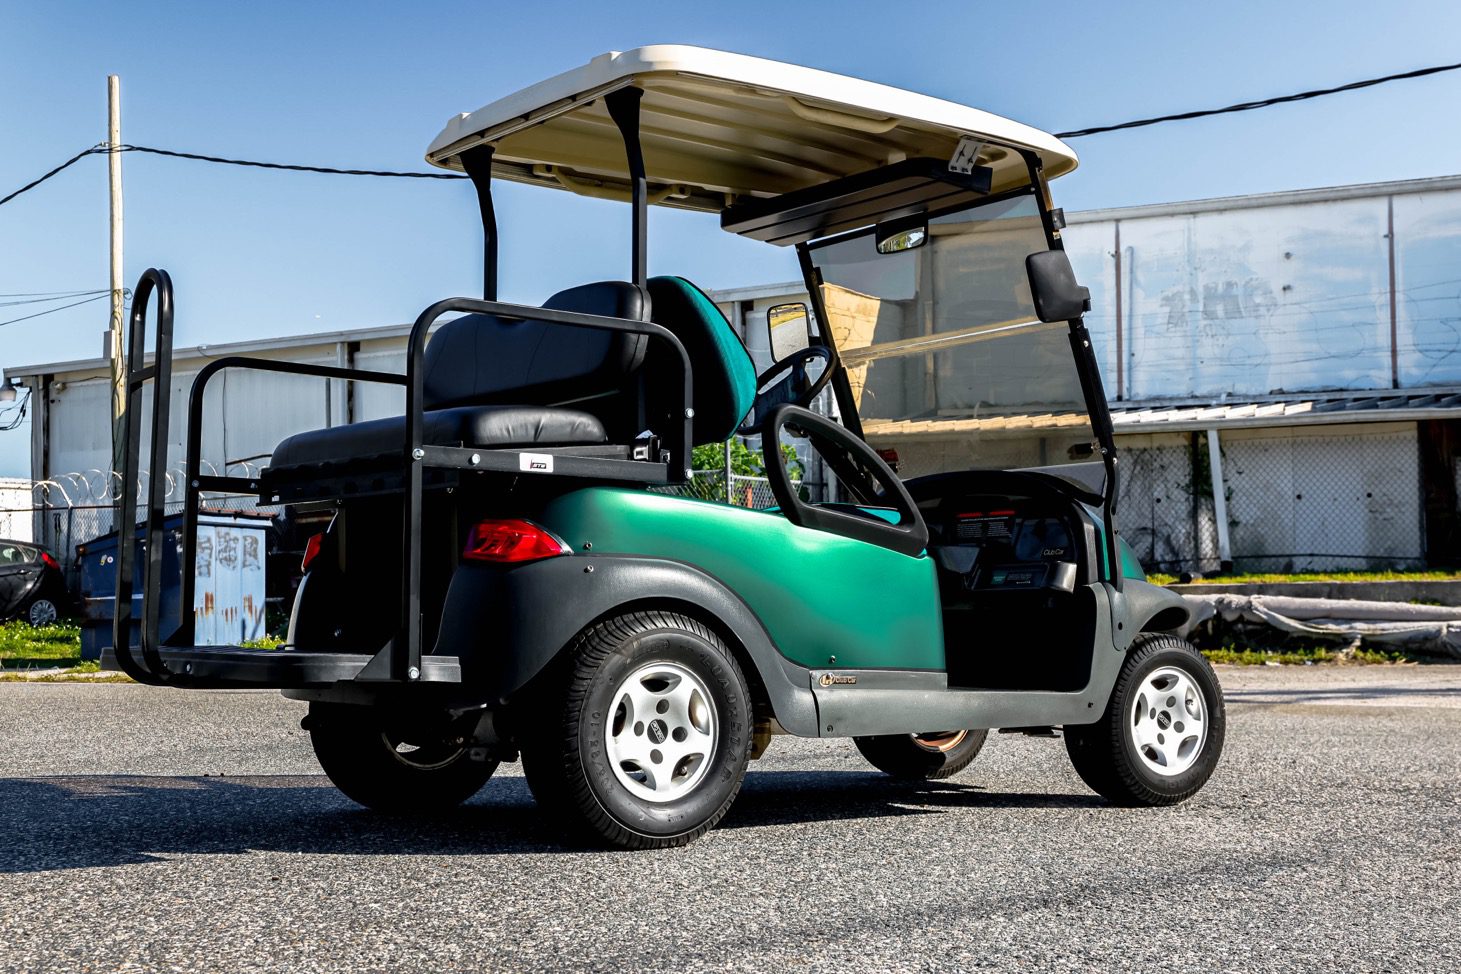 Green golf cart design with details